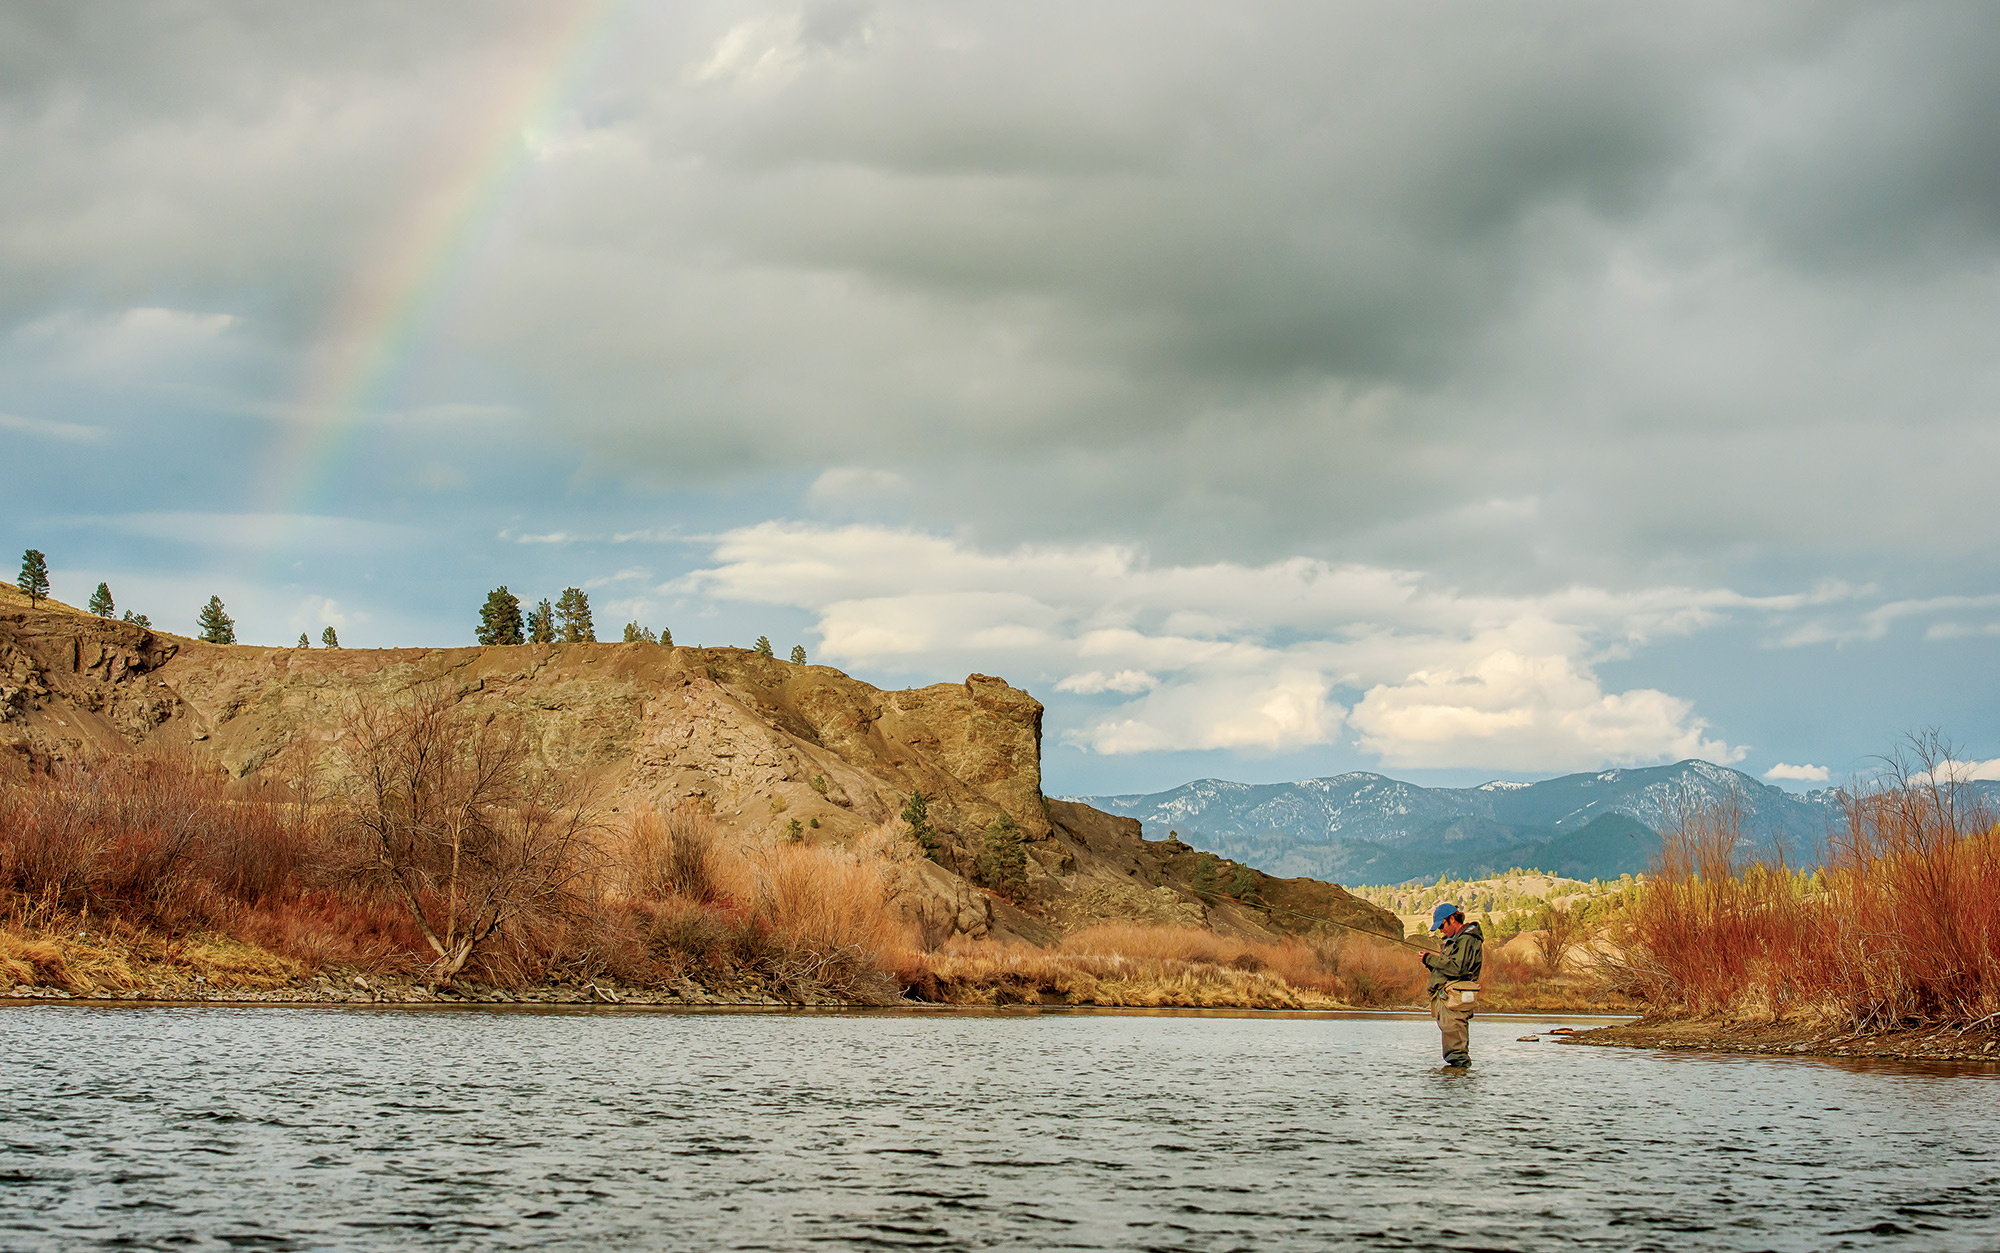 Fly Fishing With Dog Missouri River Montana Western Landscape Original Oil